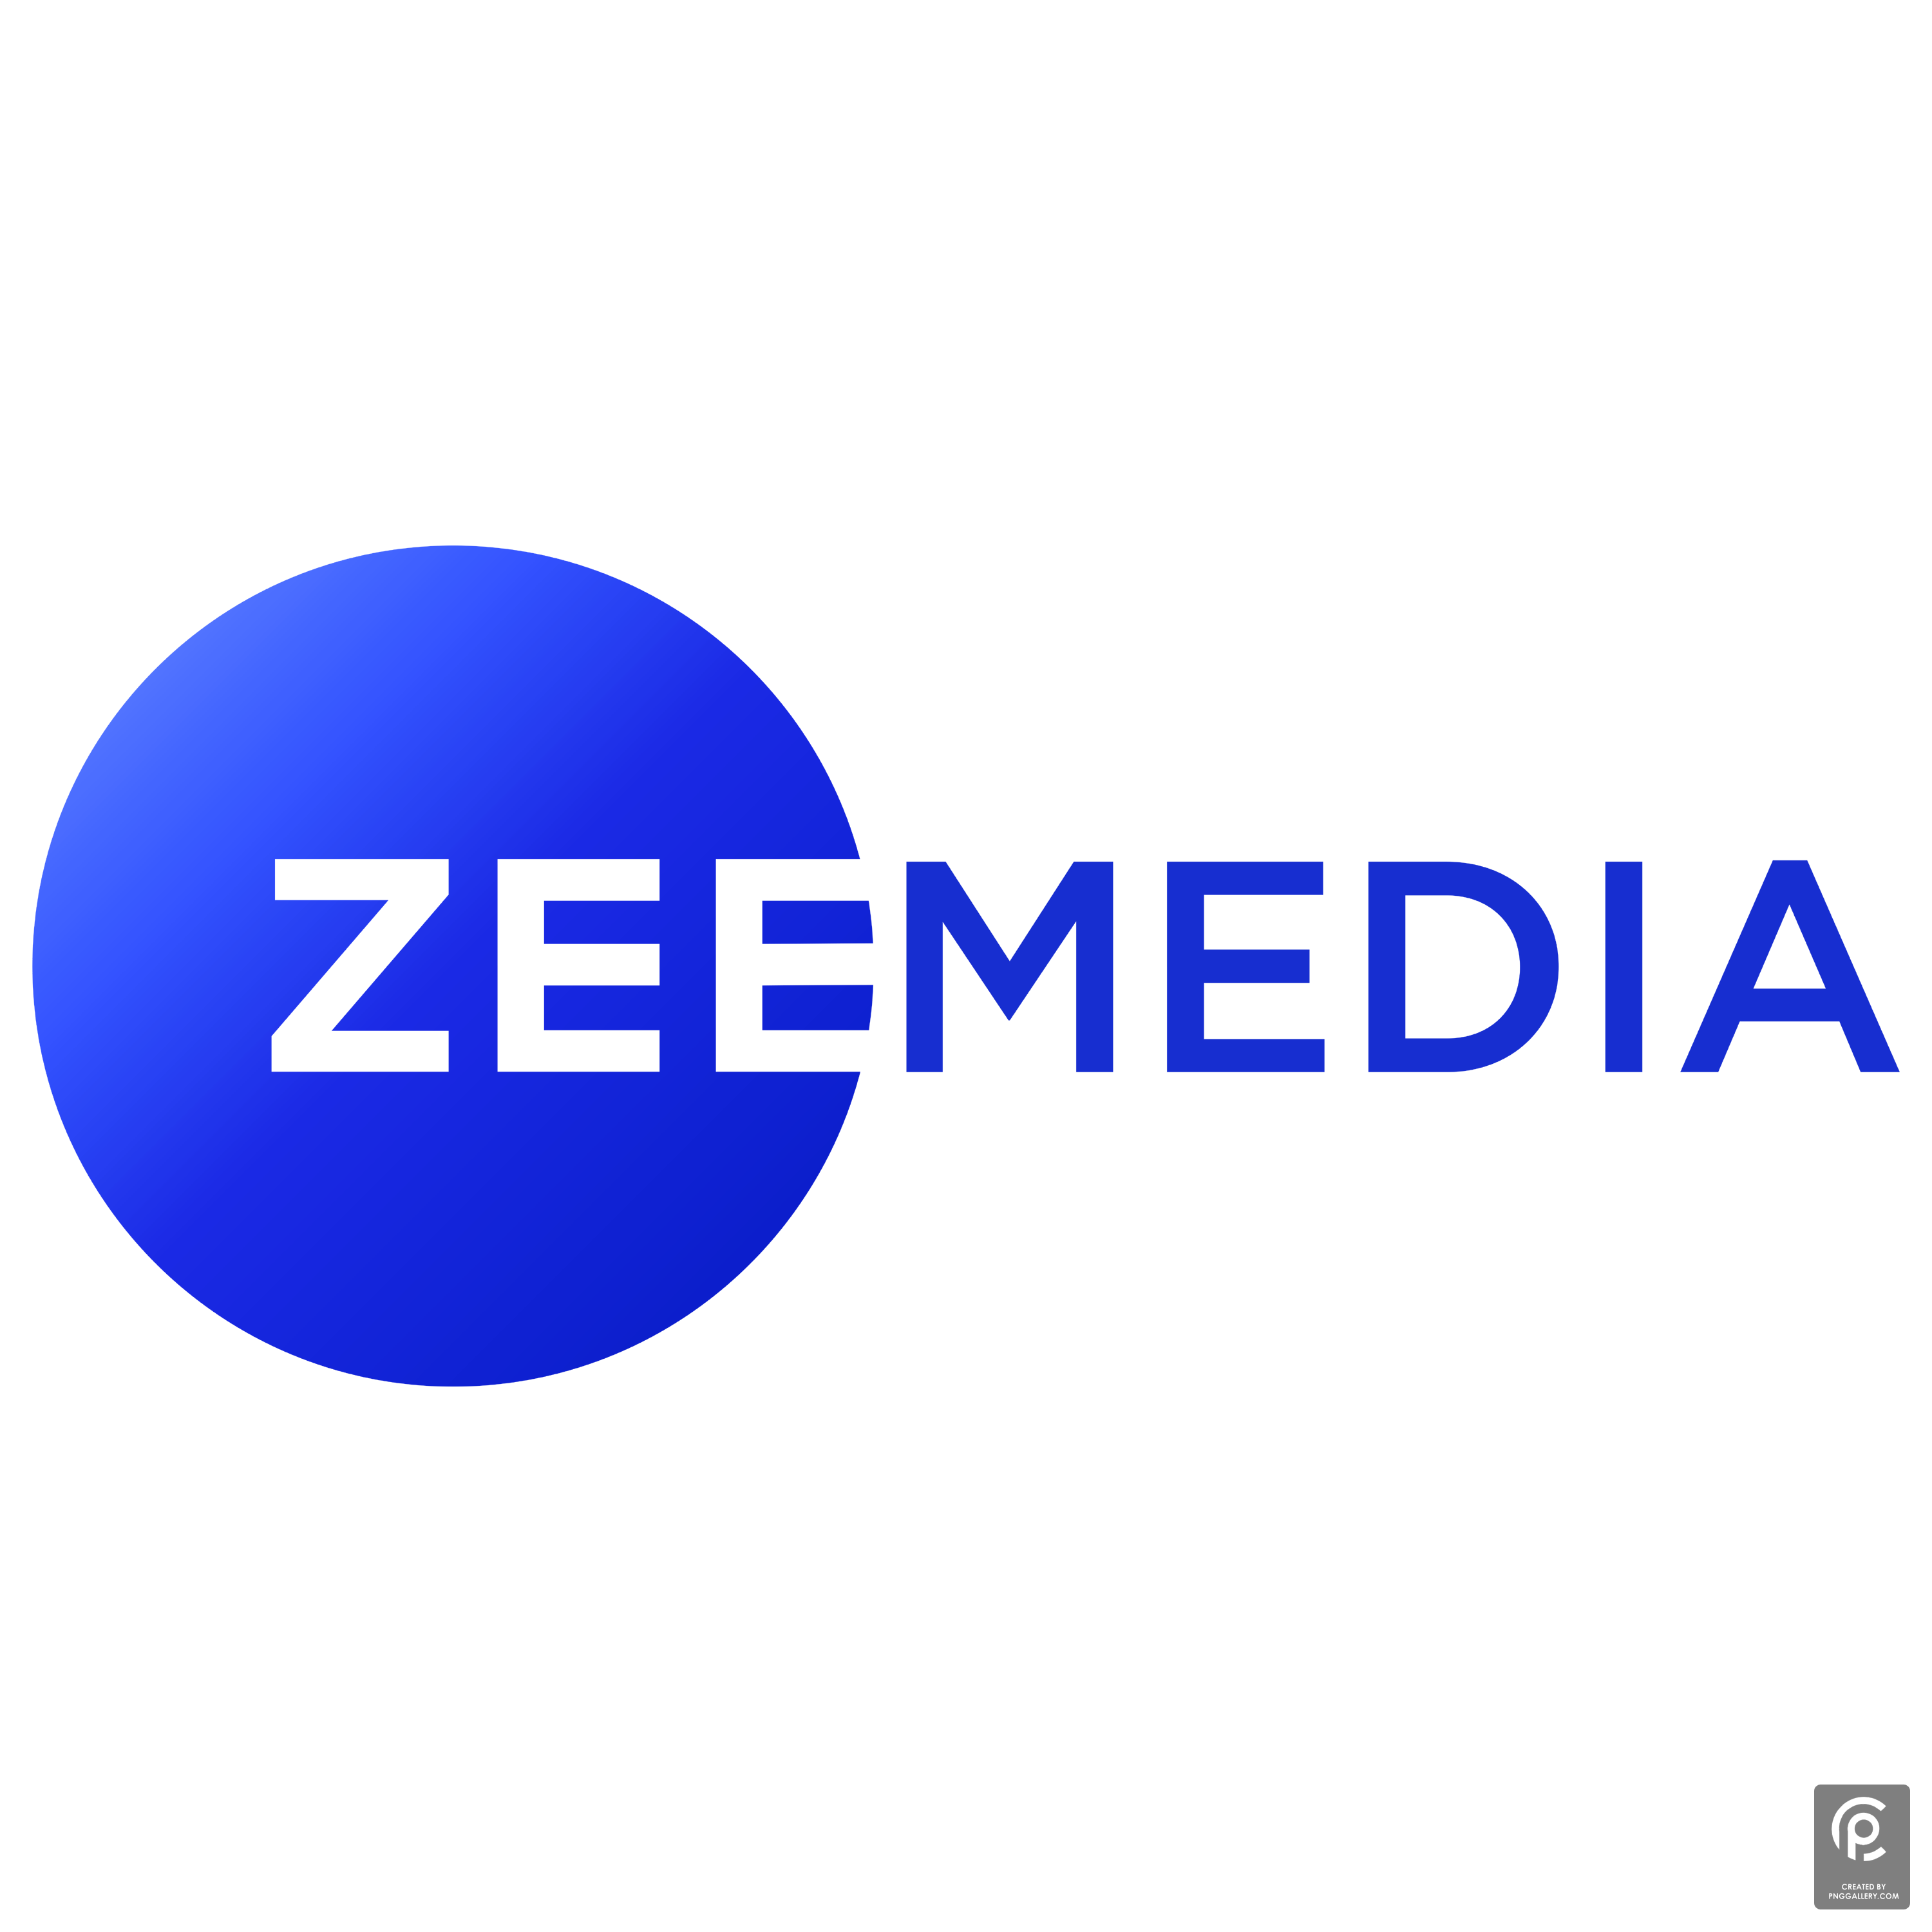 Zee Media Logo Transparent Picture